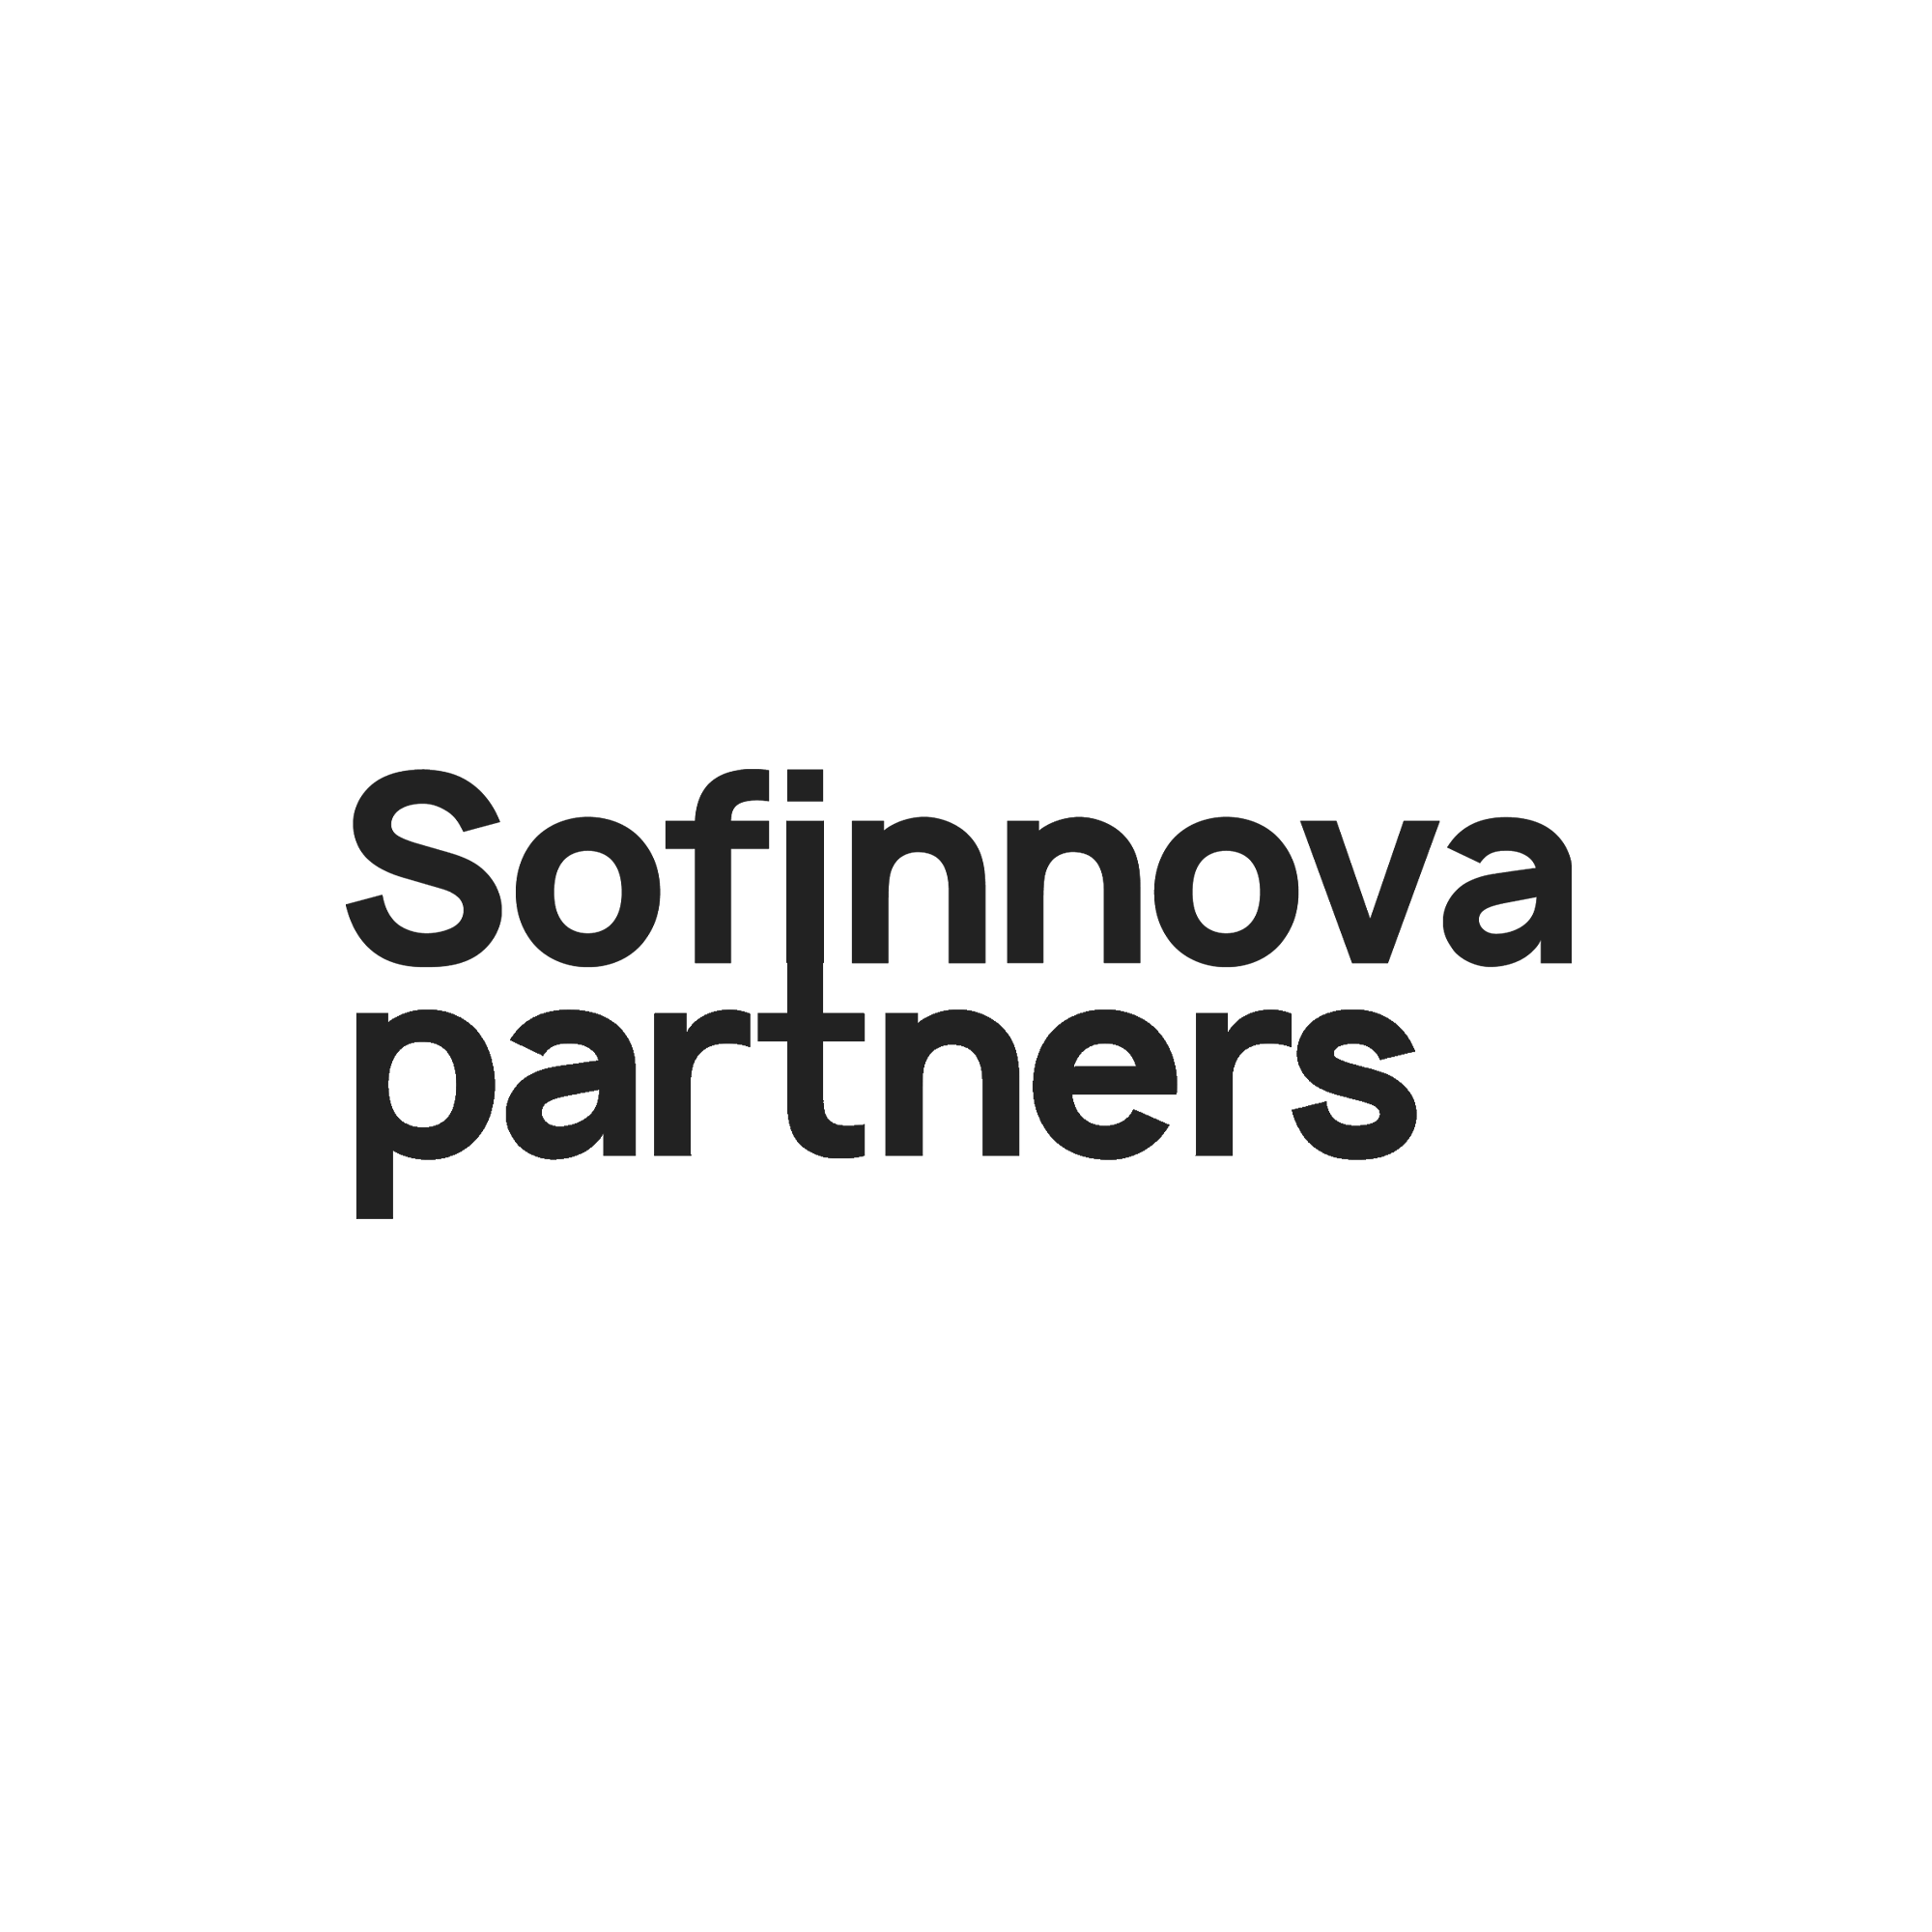 Sofinnova partners